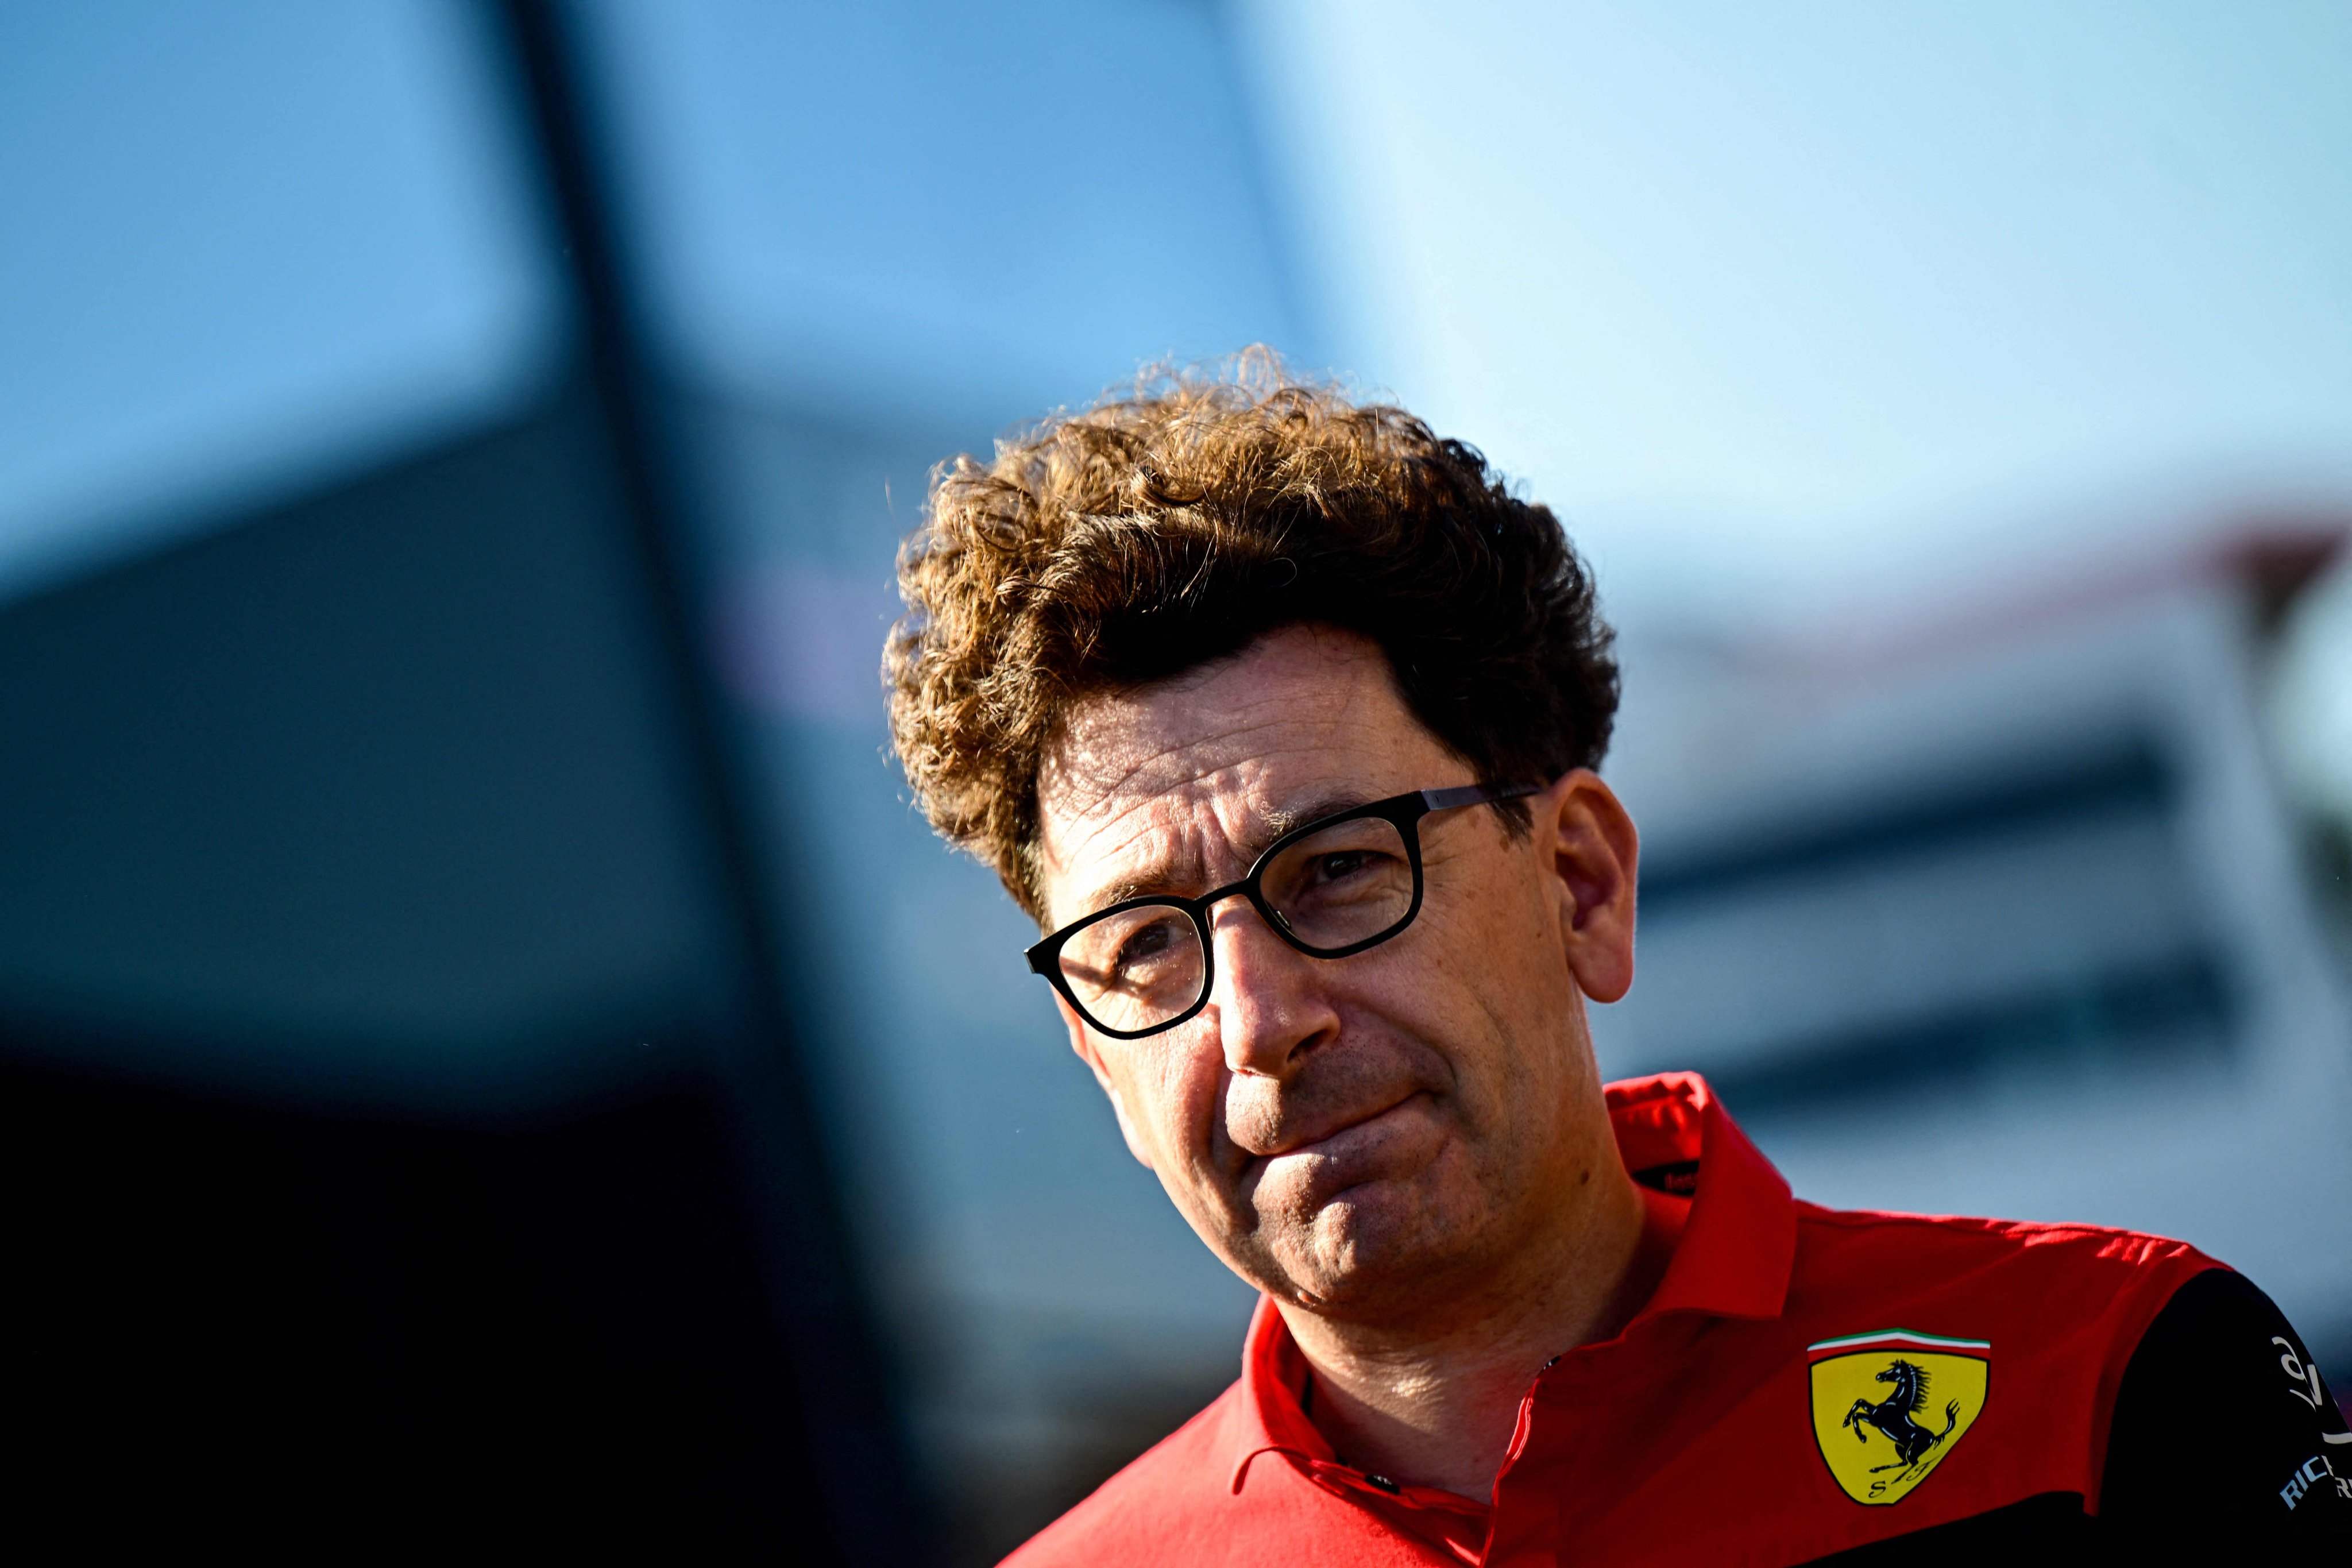 Ferrari boss Mattia Binotto has resigned, the Italian Formula One team said. Photo: AFP